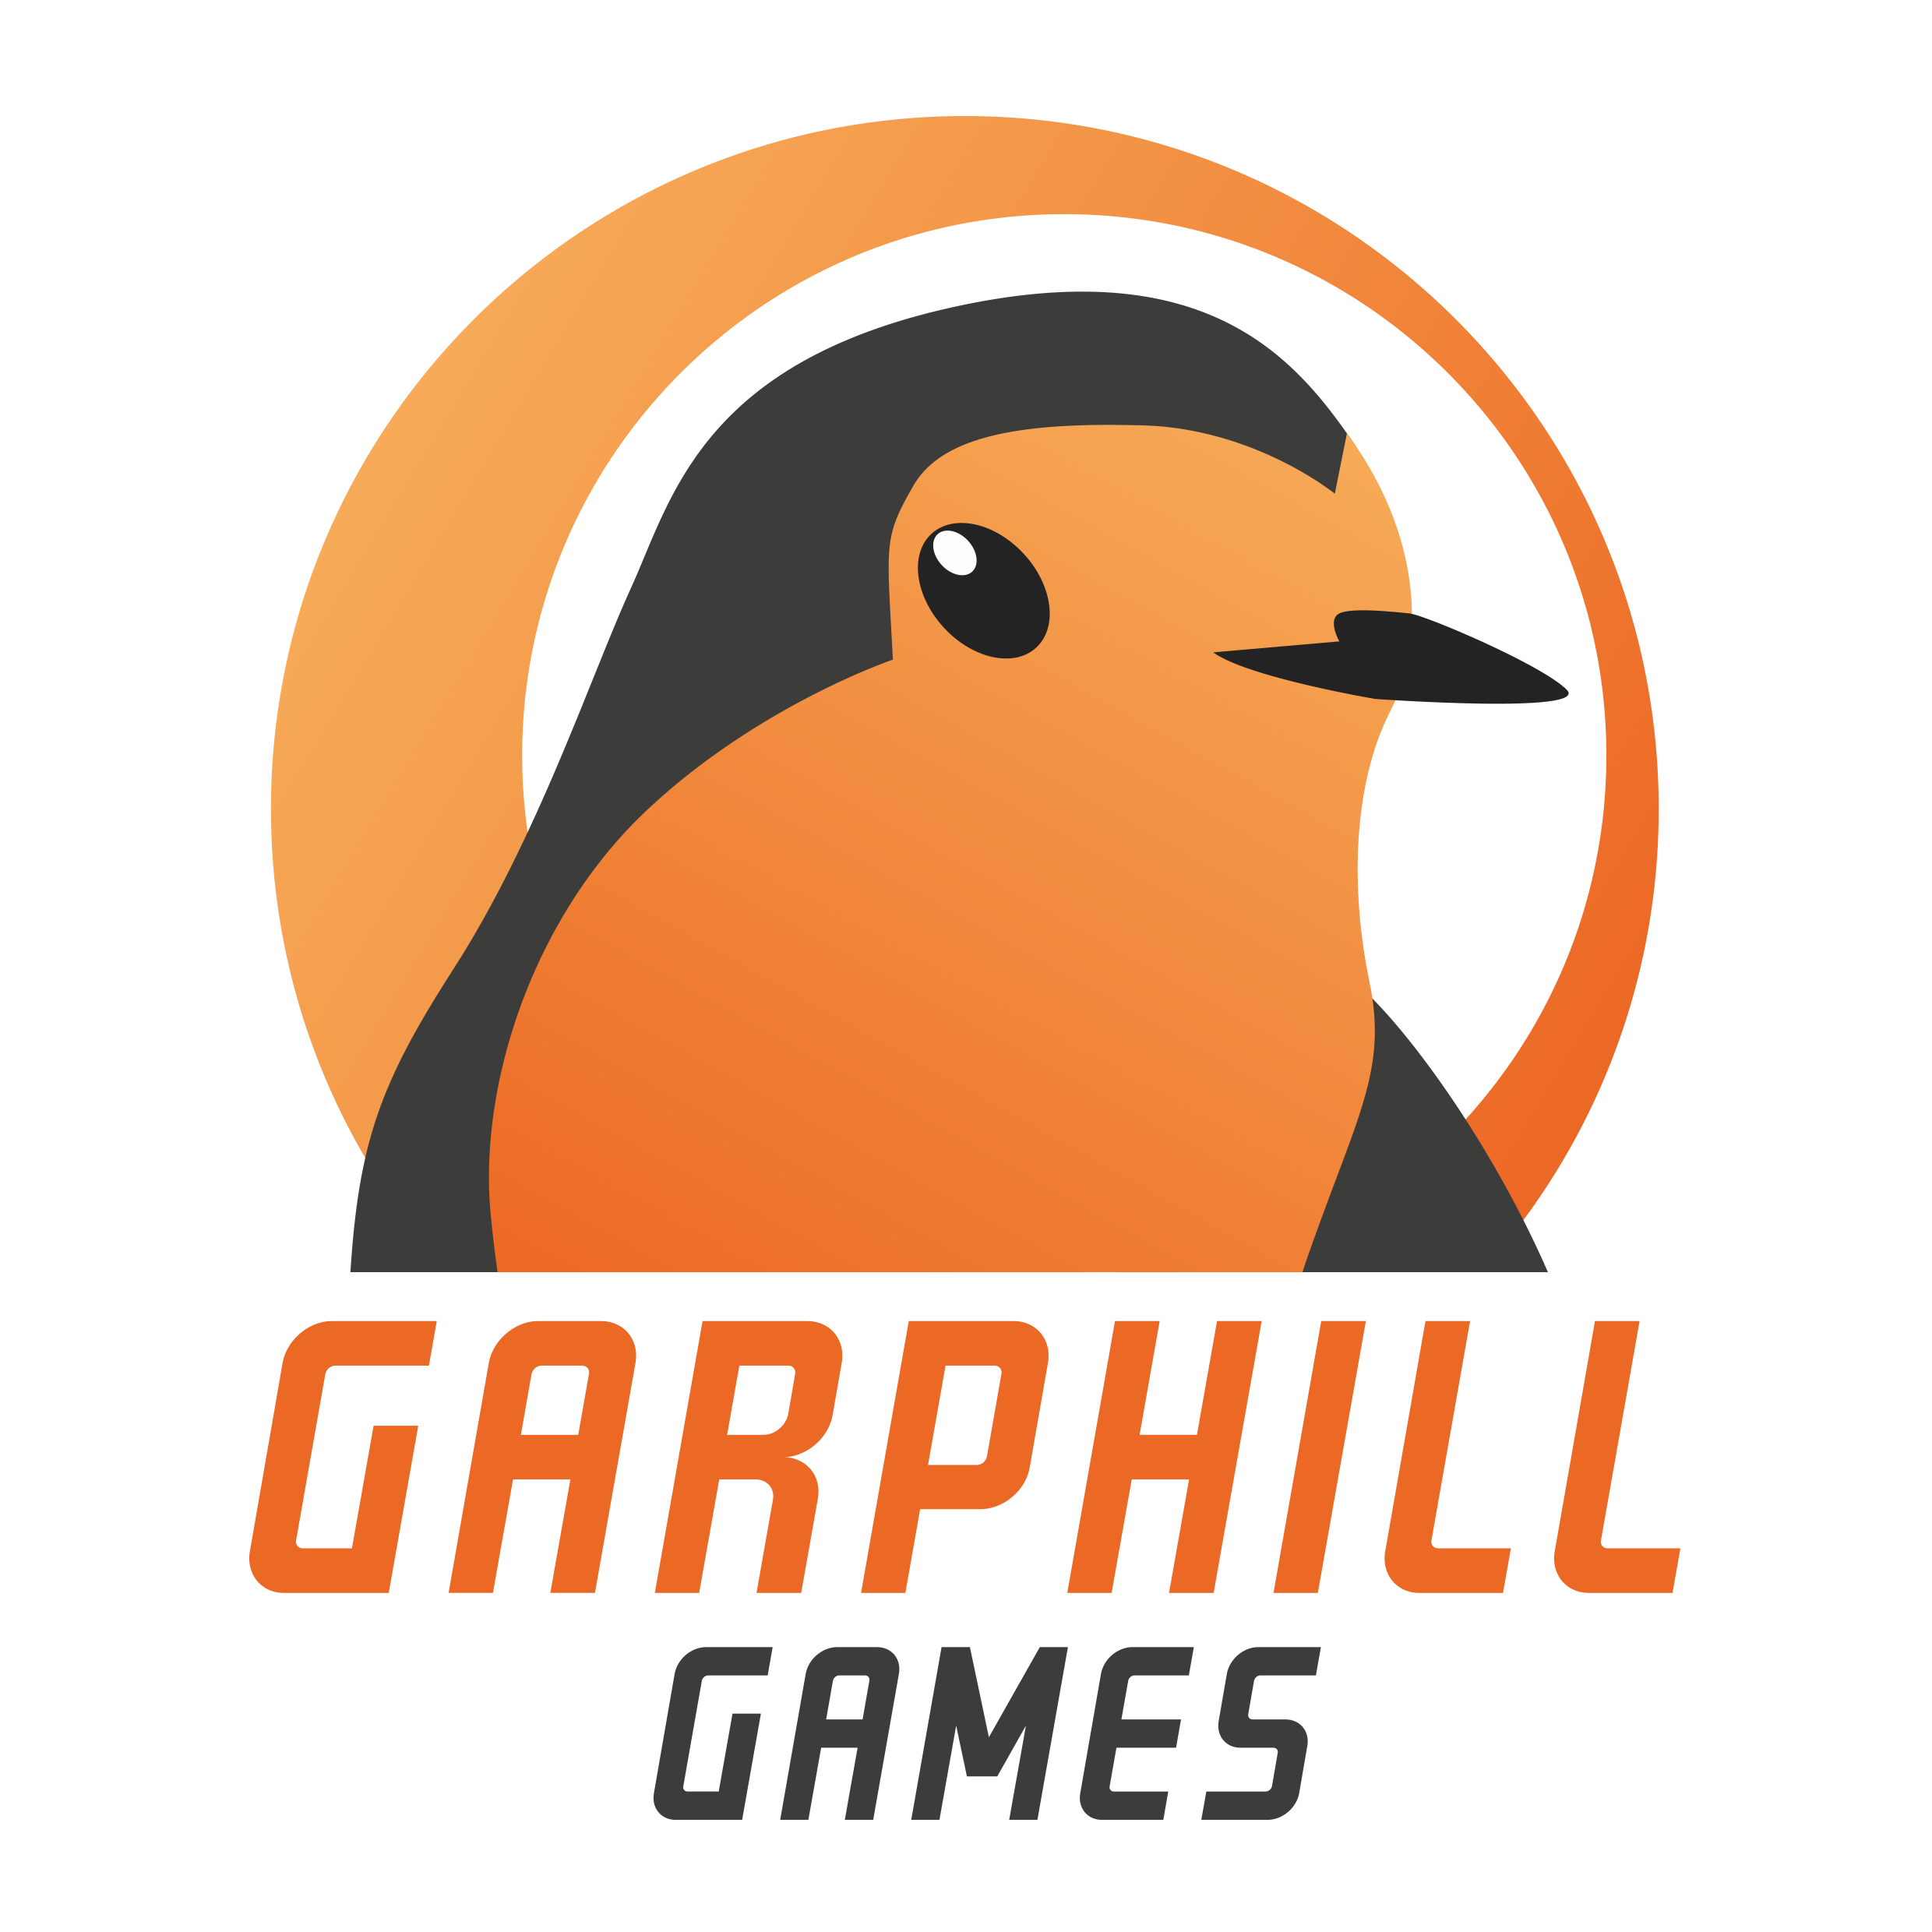 Garphill Games Logo